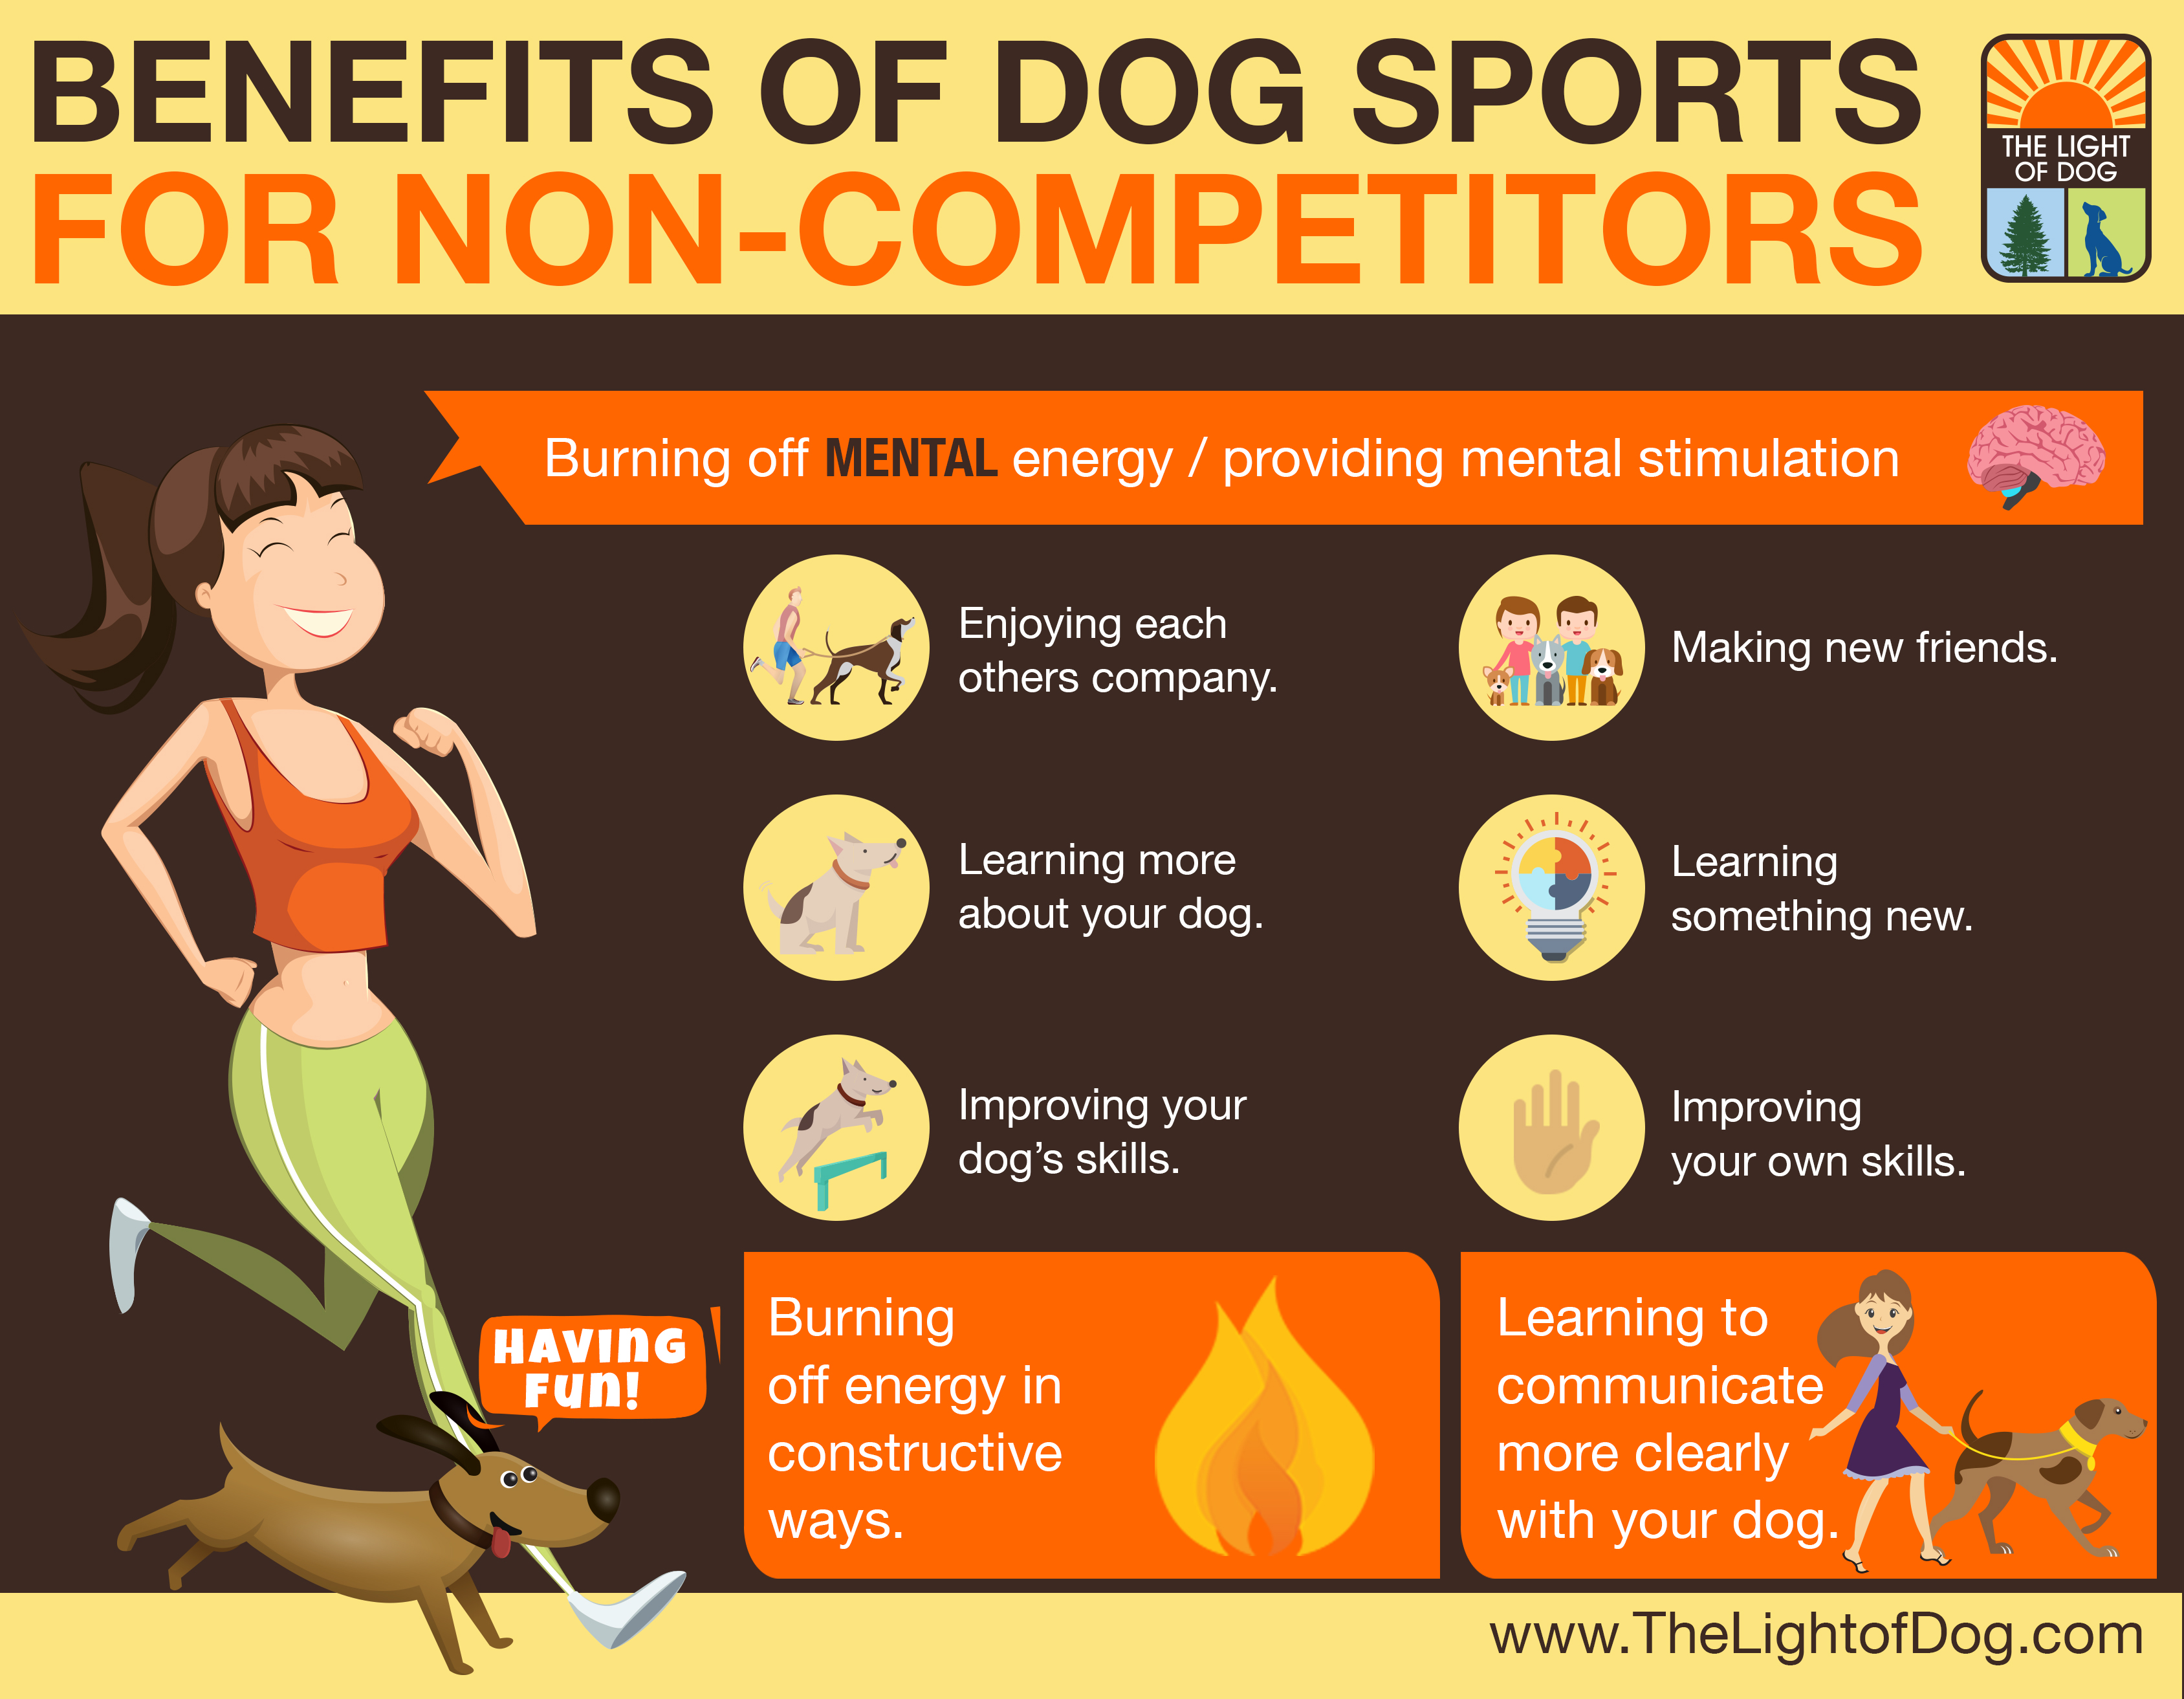 Benefits of dog sports